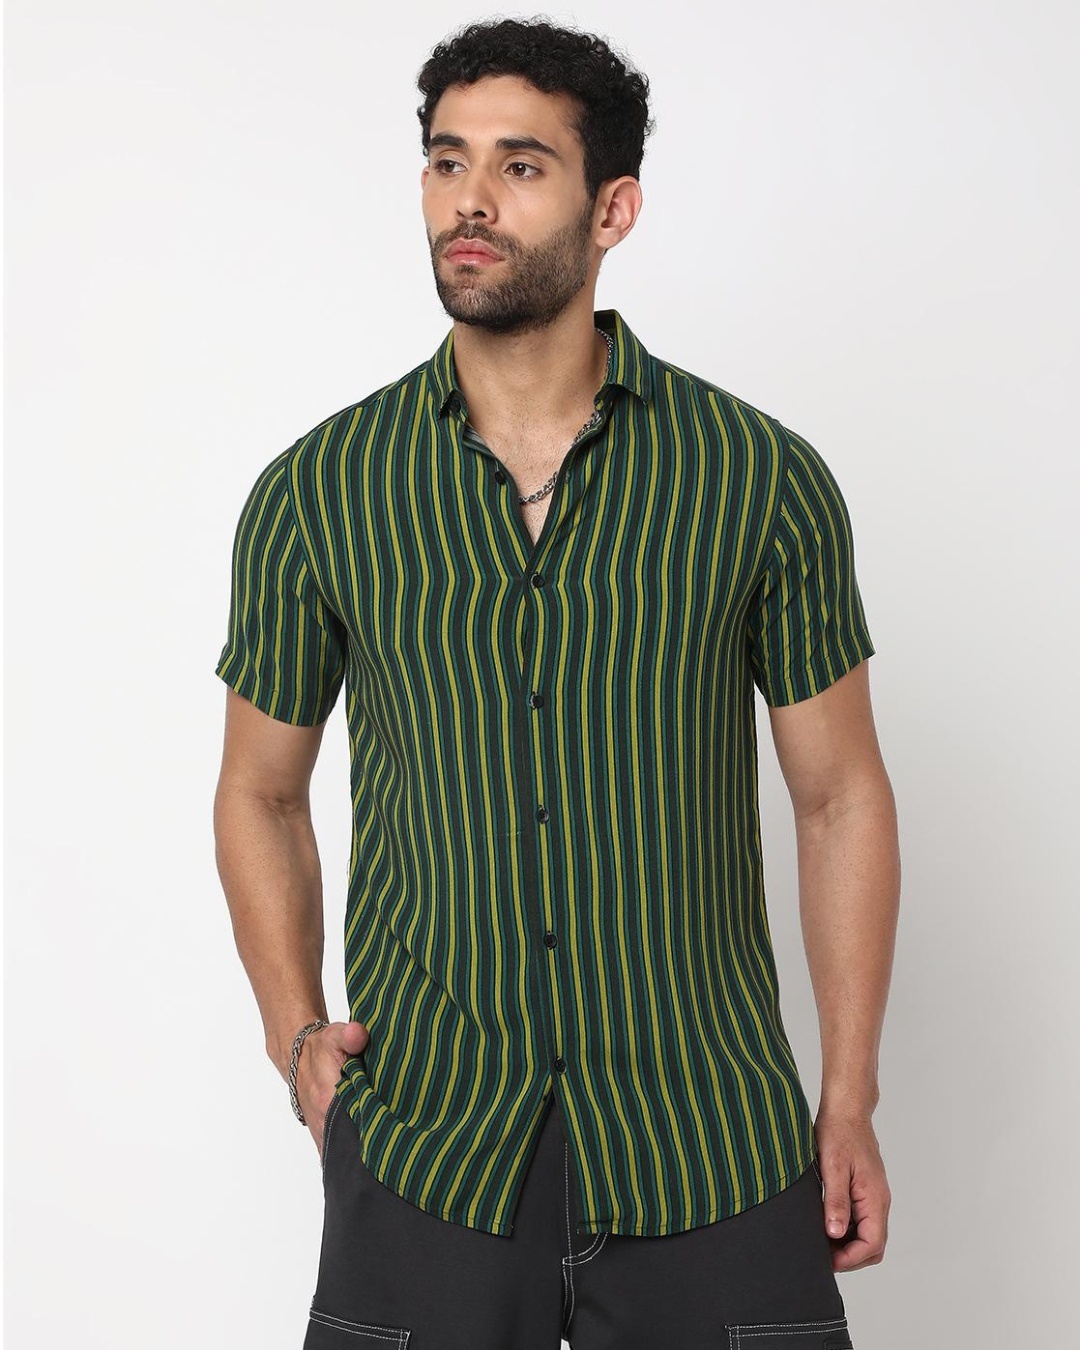 Buy Men's Green Striped Shirt Online at Bewakoof